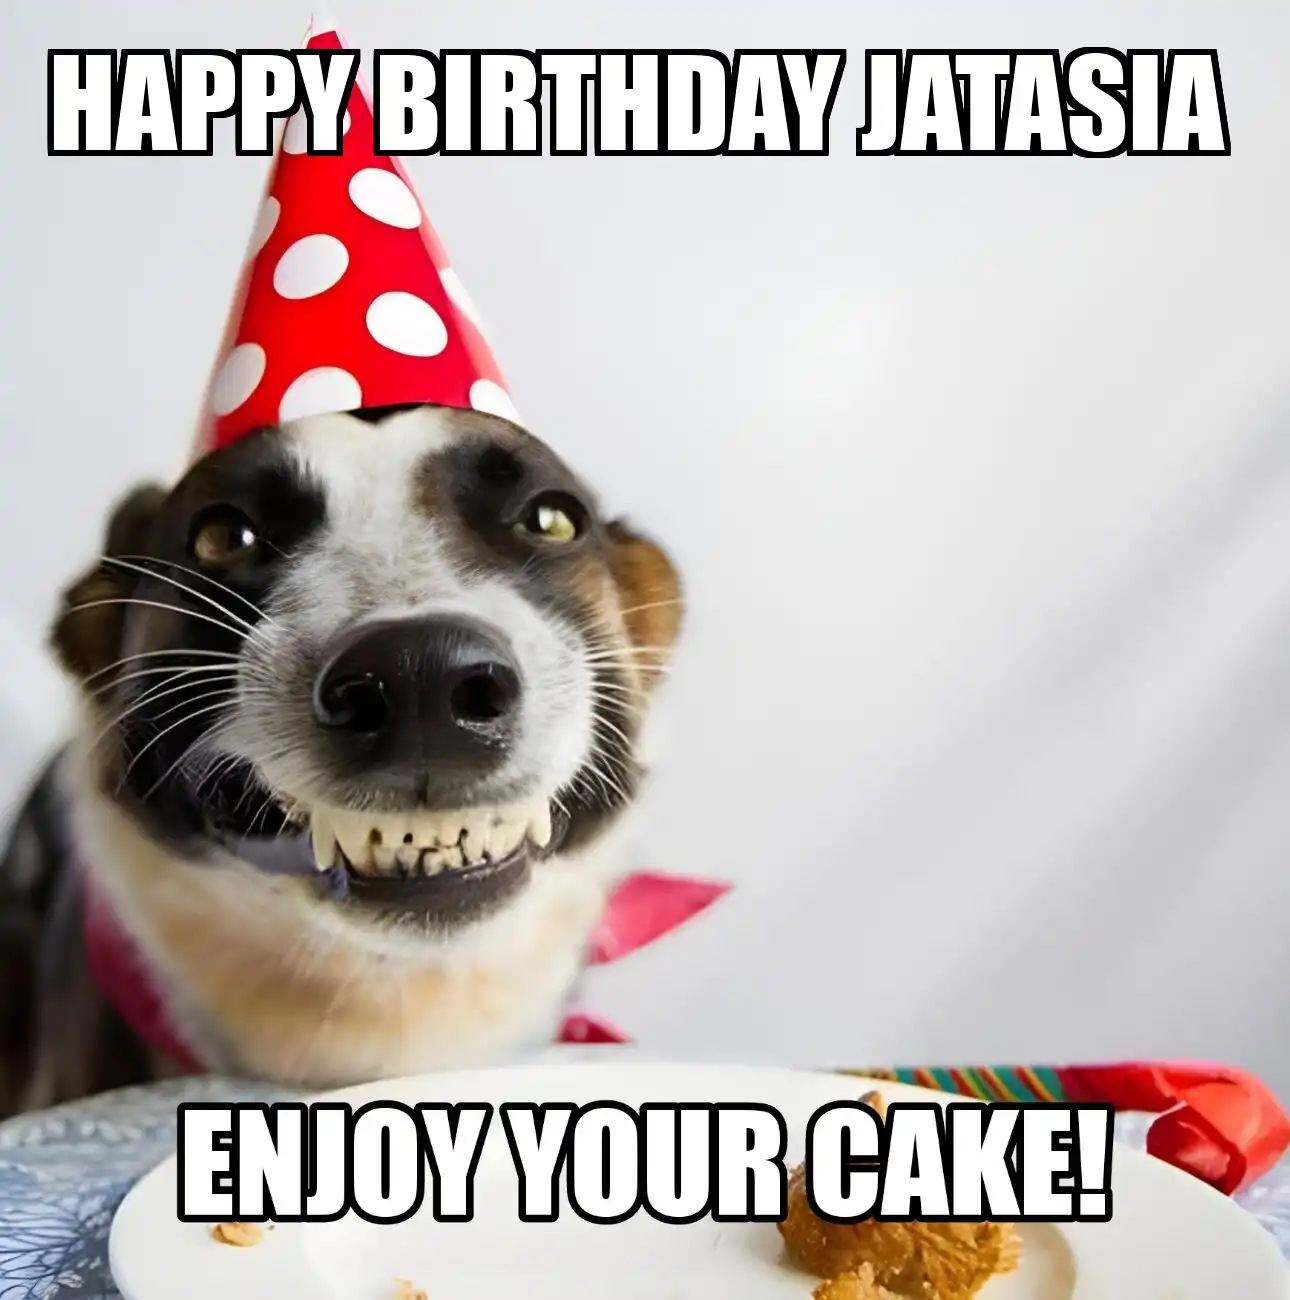 Happy Birthday Jatasia Enjoy Your Cake Dog Meme